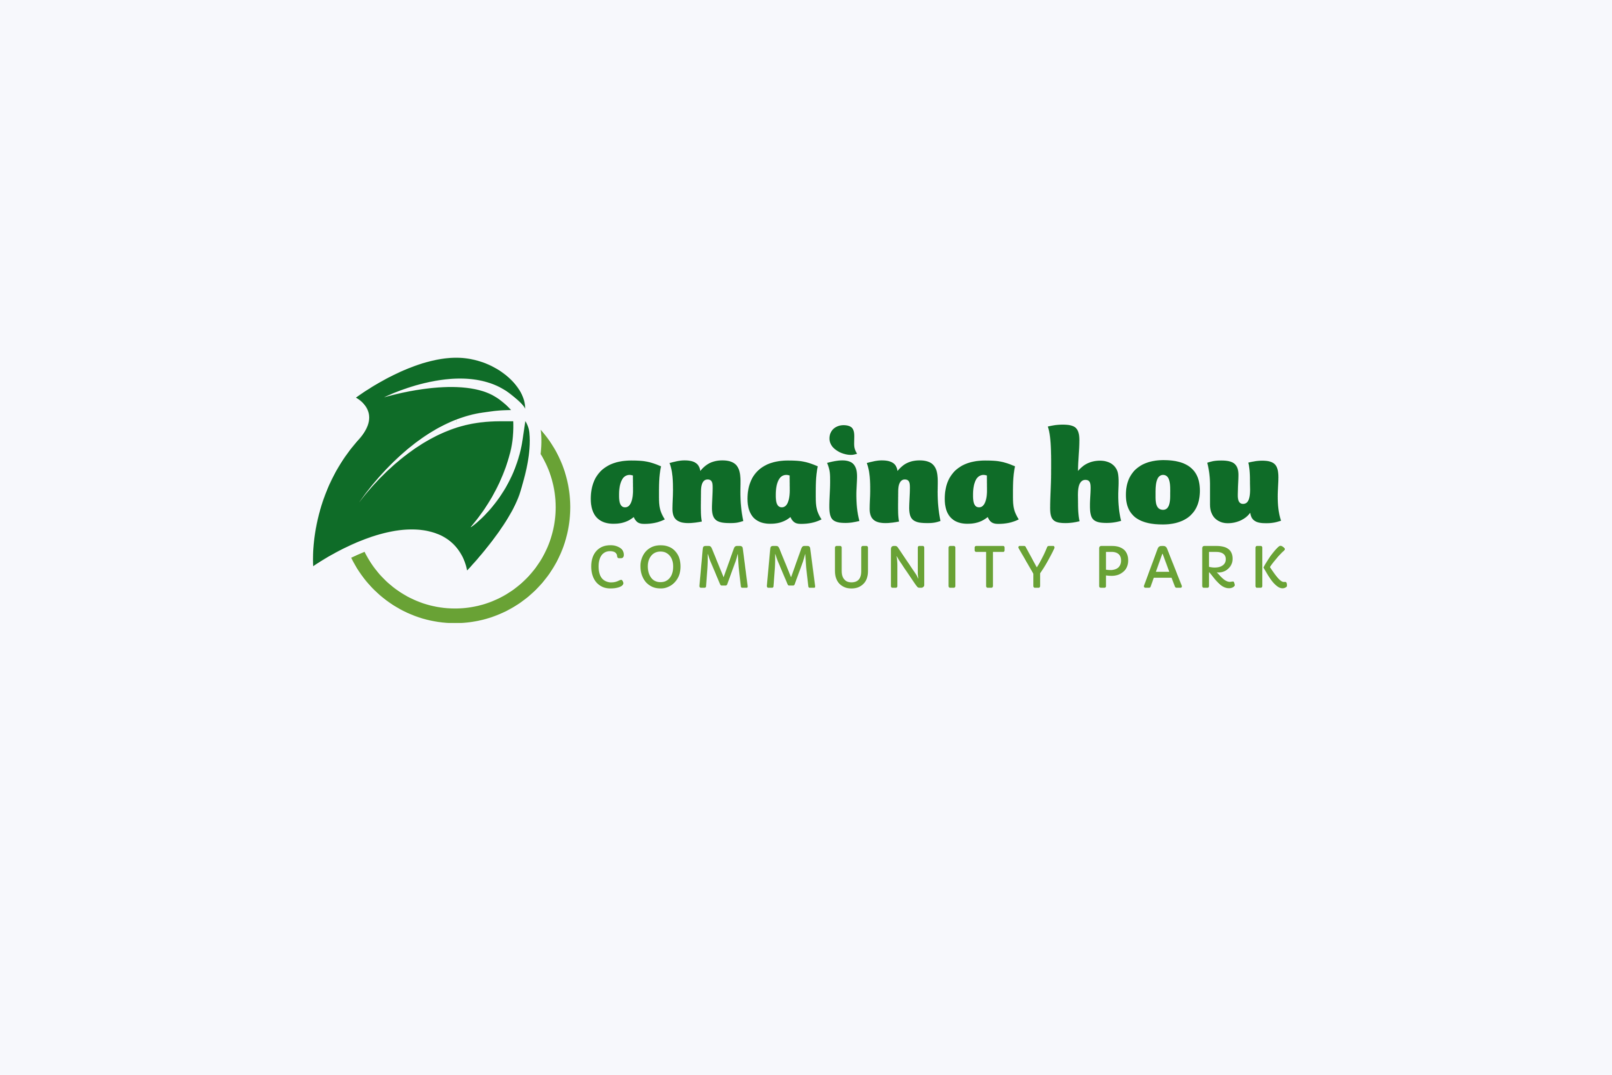 anaina hou community park logo design